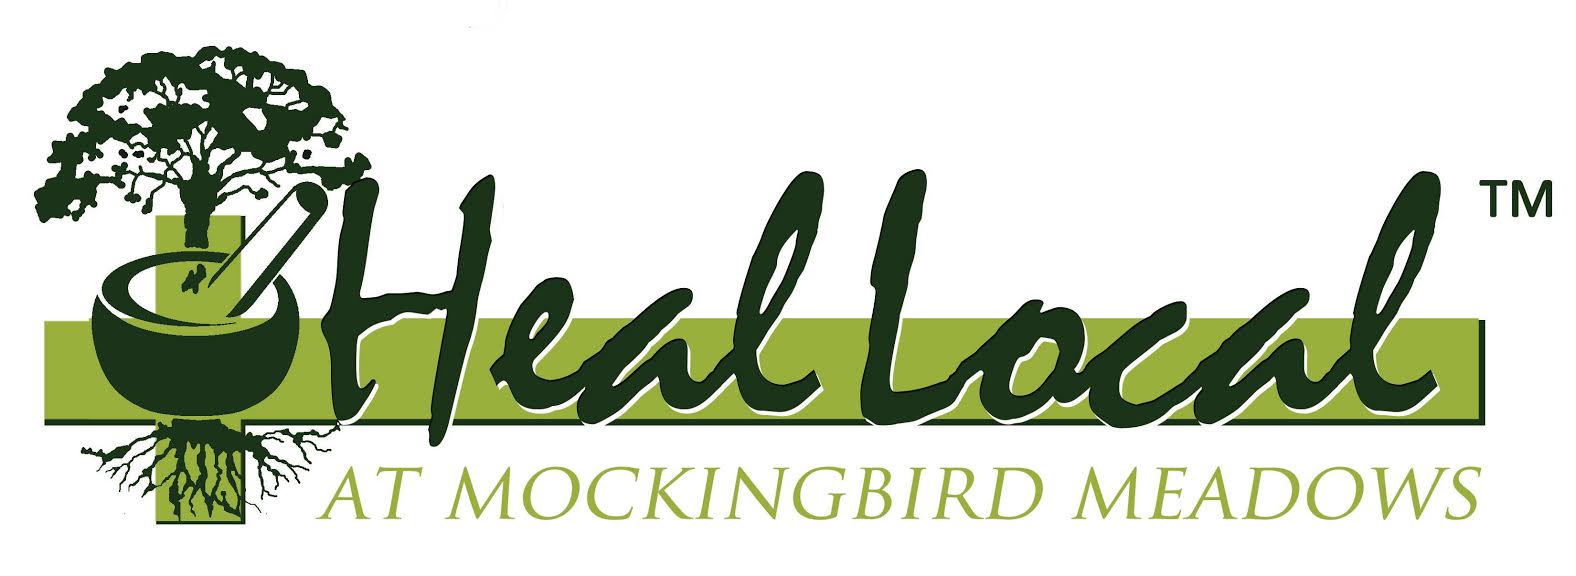 Mockingbird Meadows